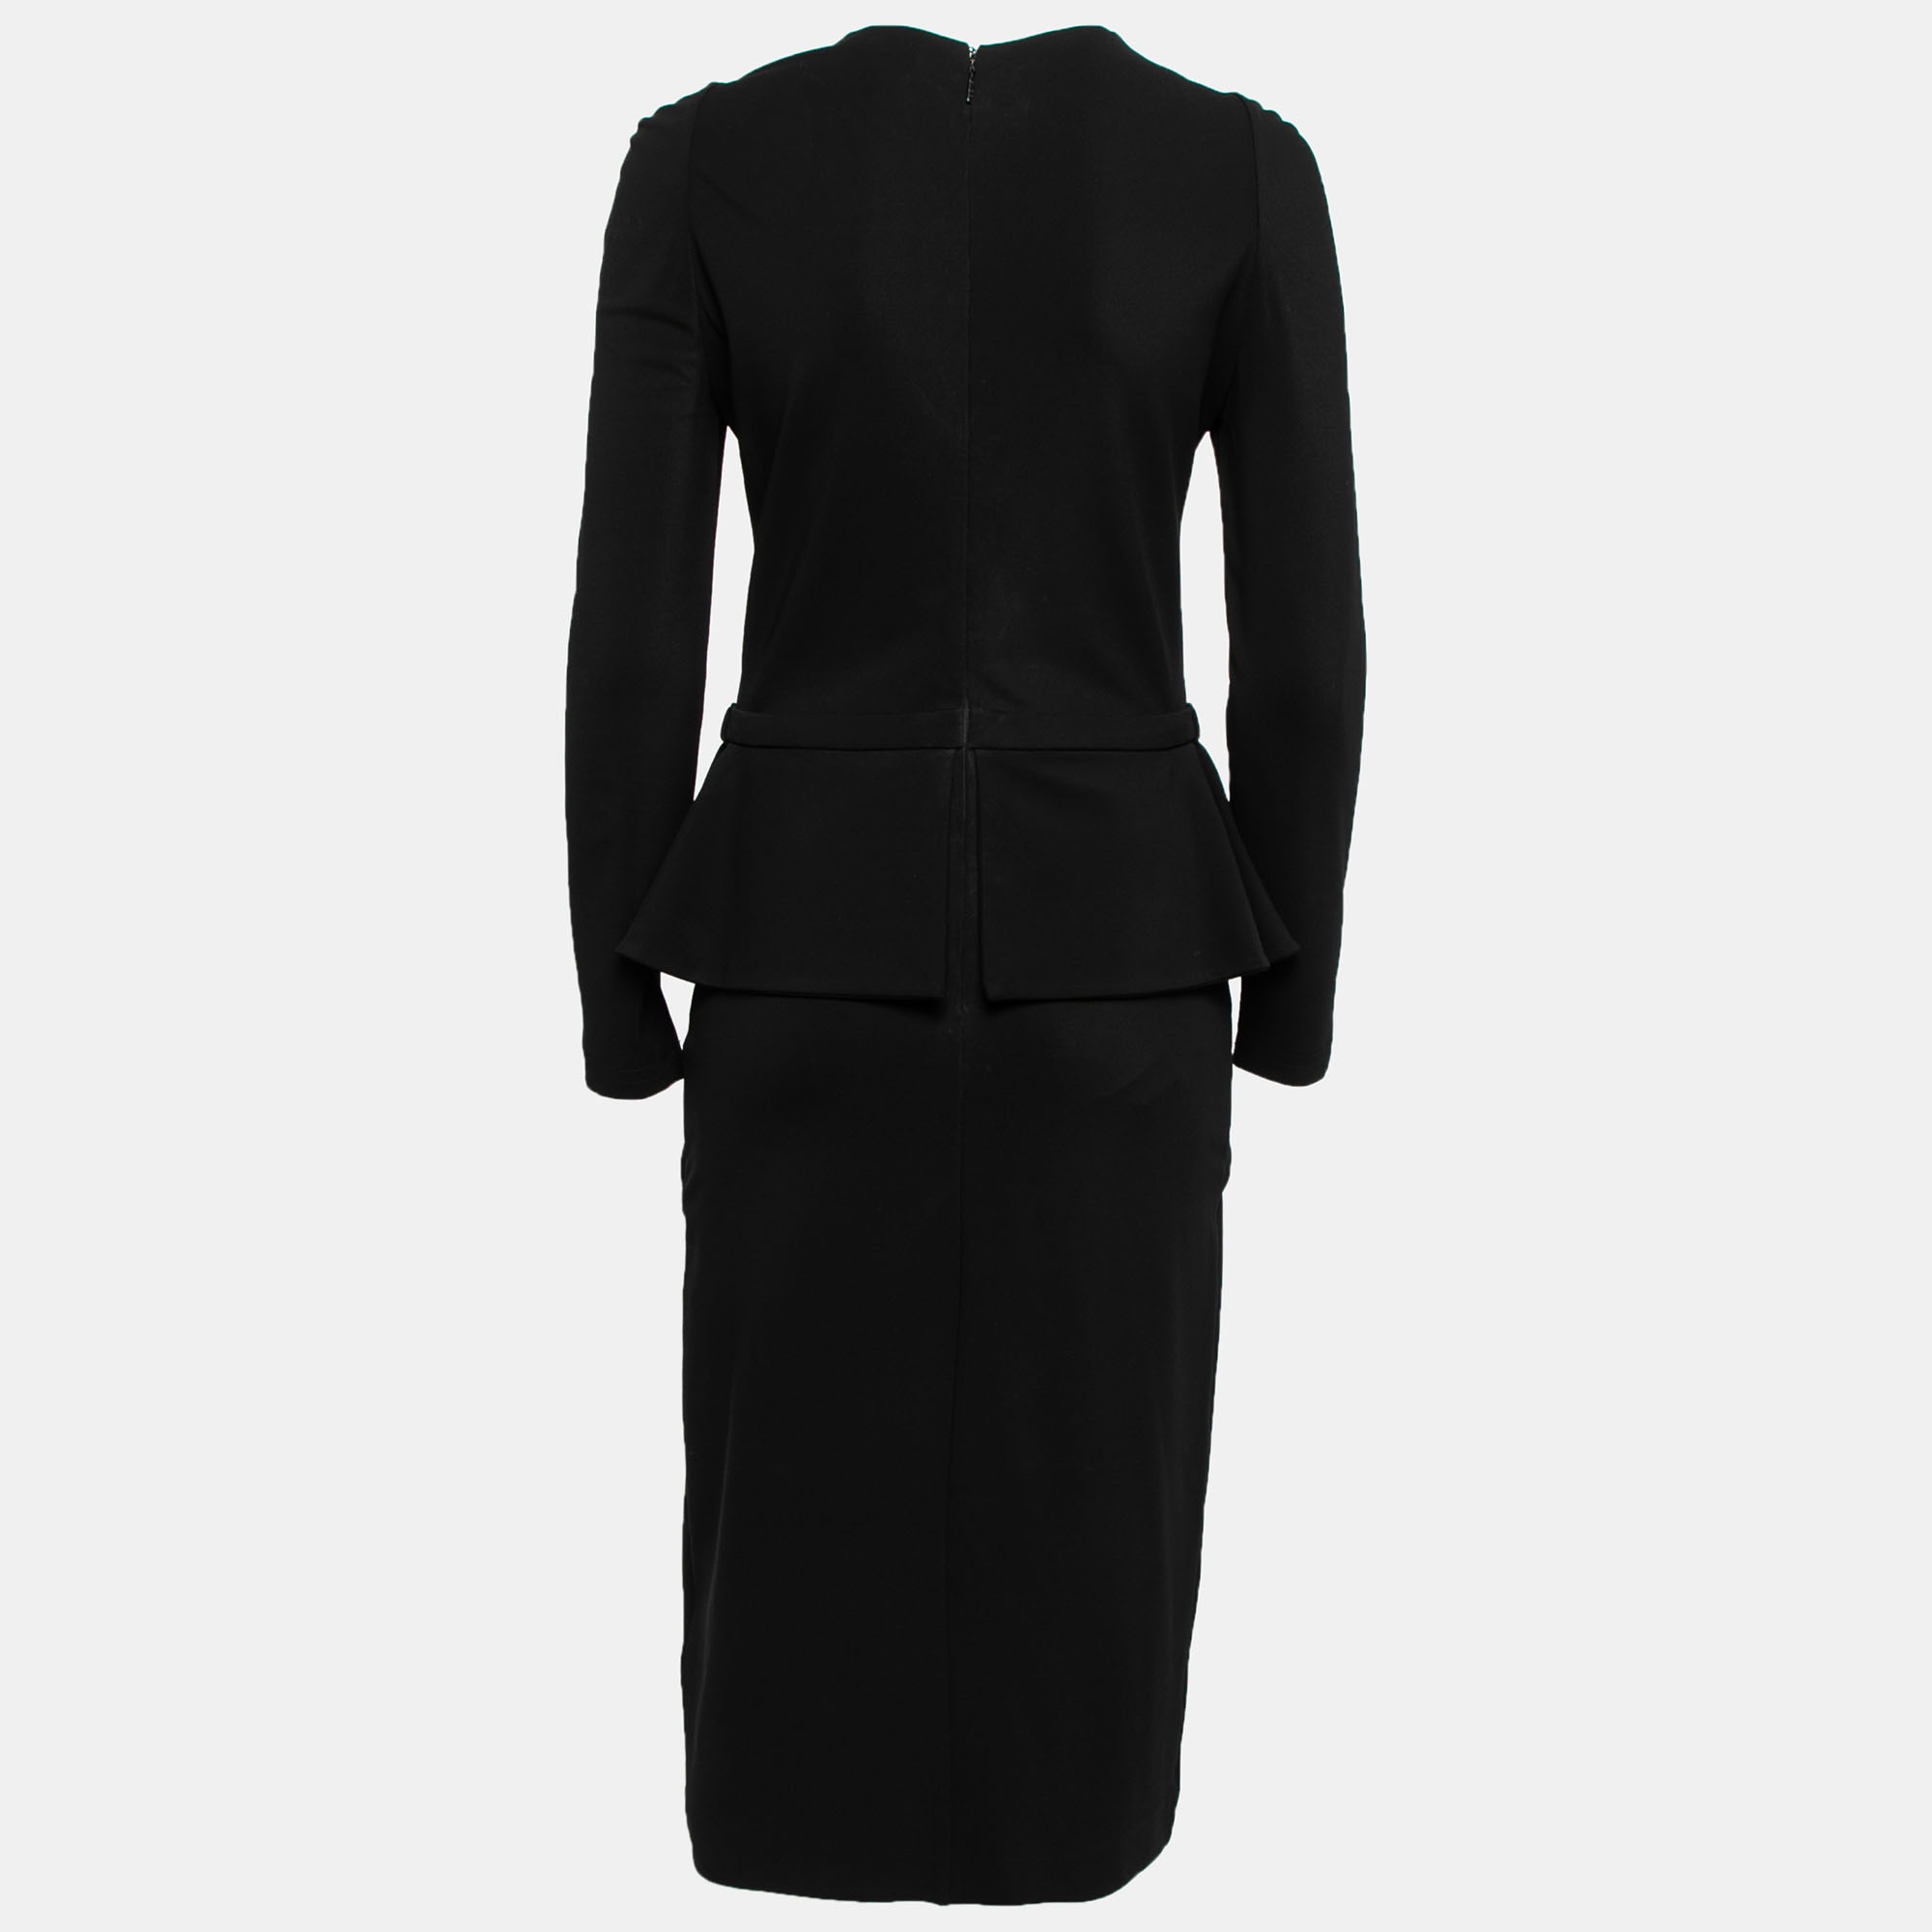 

Gucci Black Knit Overlay Detail Long Sleeve Midi Dress